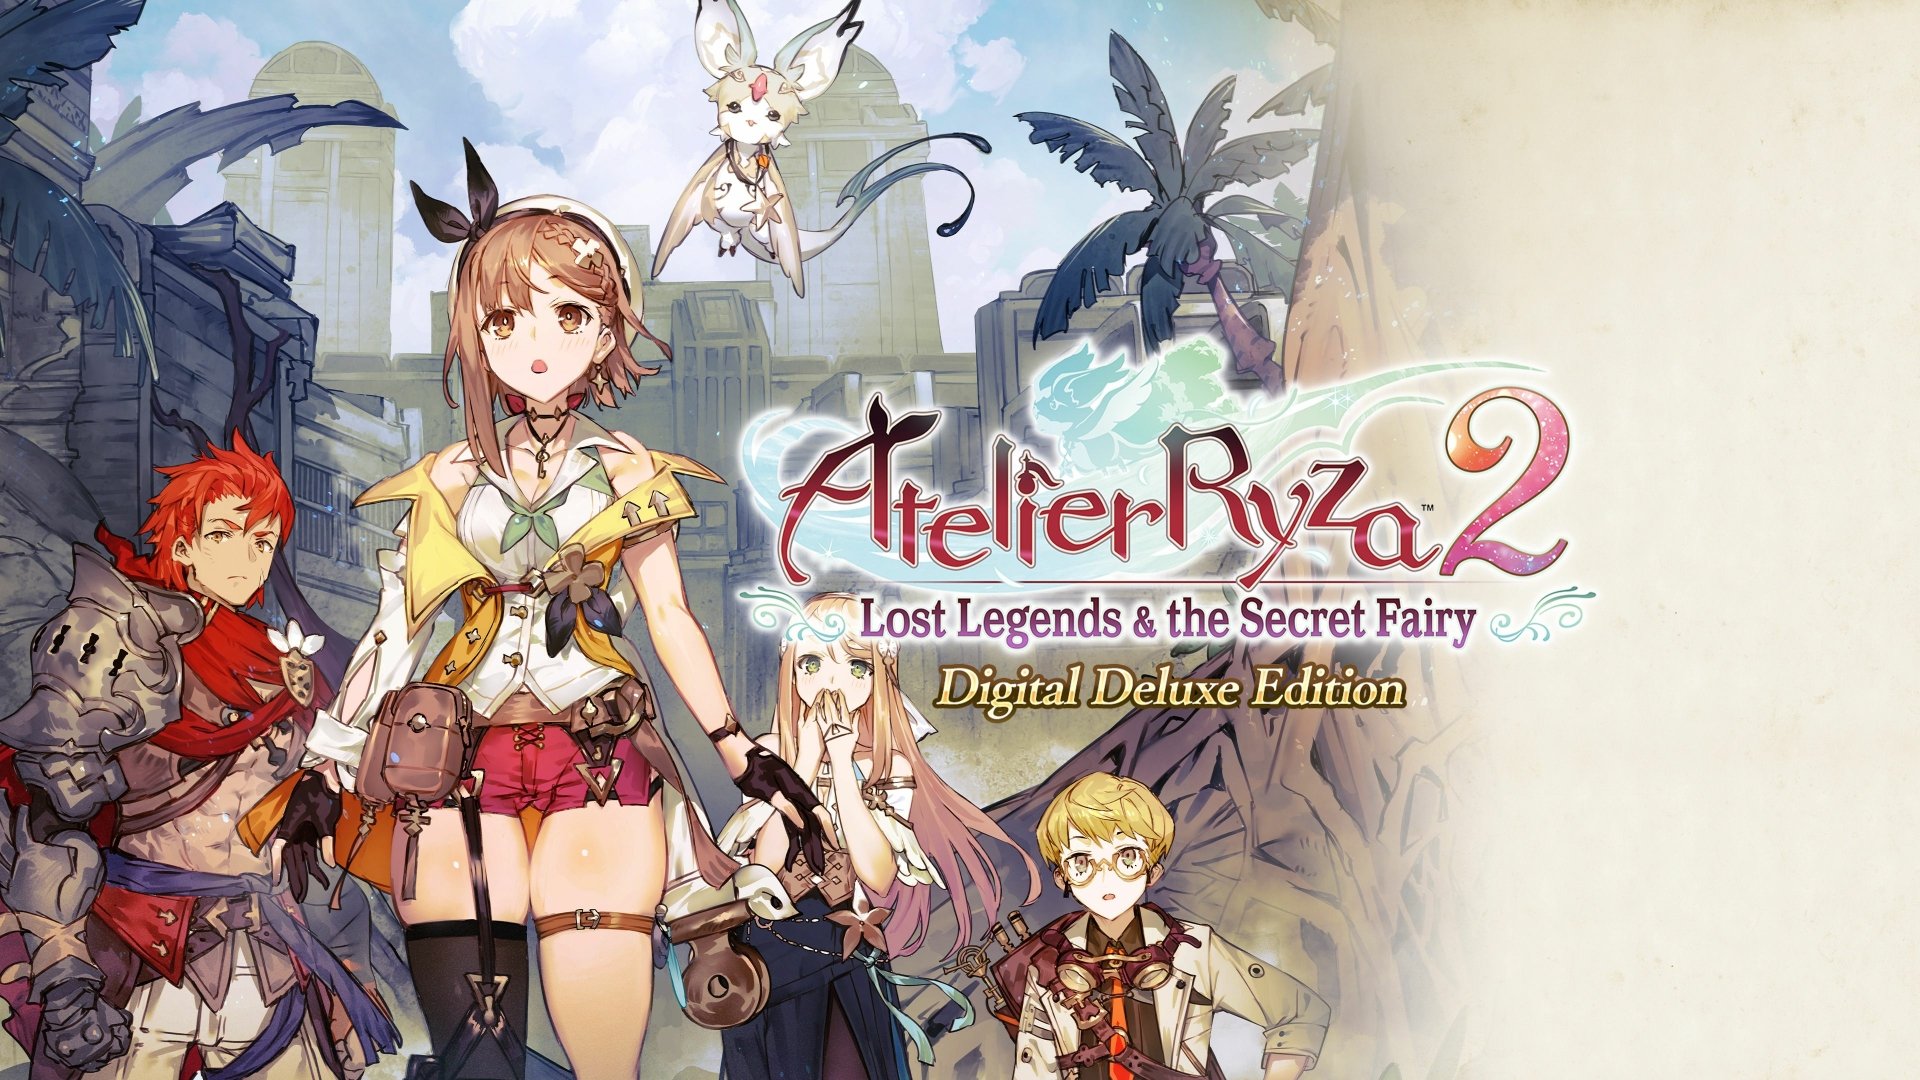 3840x2160 Atelier Ryza 2: Lost Legends & The Secret Fairy Wallpaper Background Im...